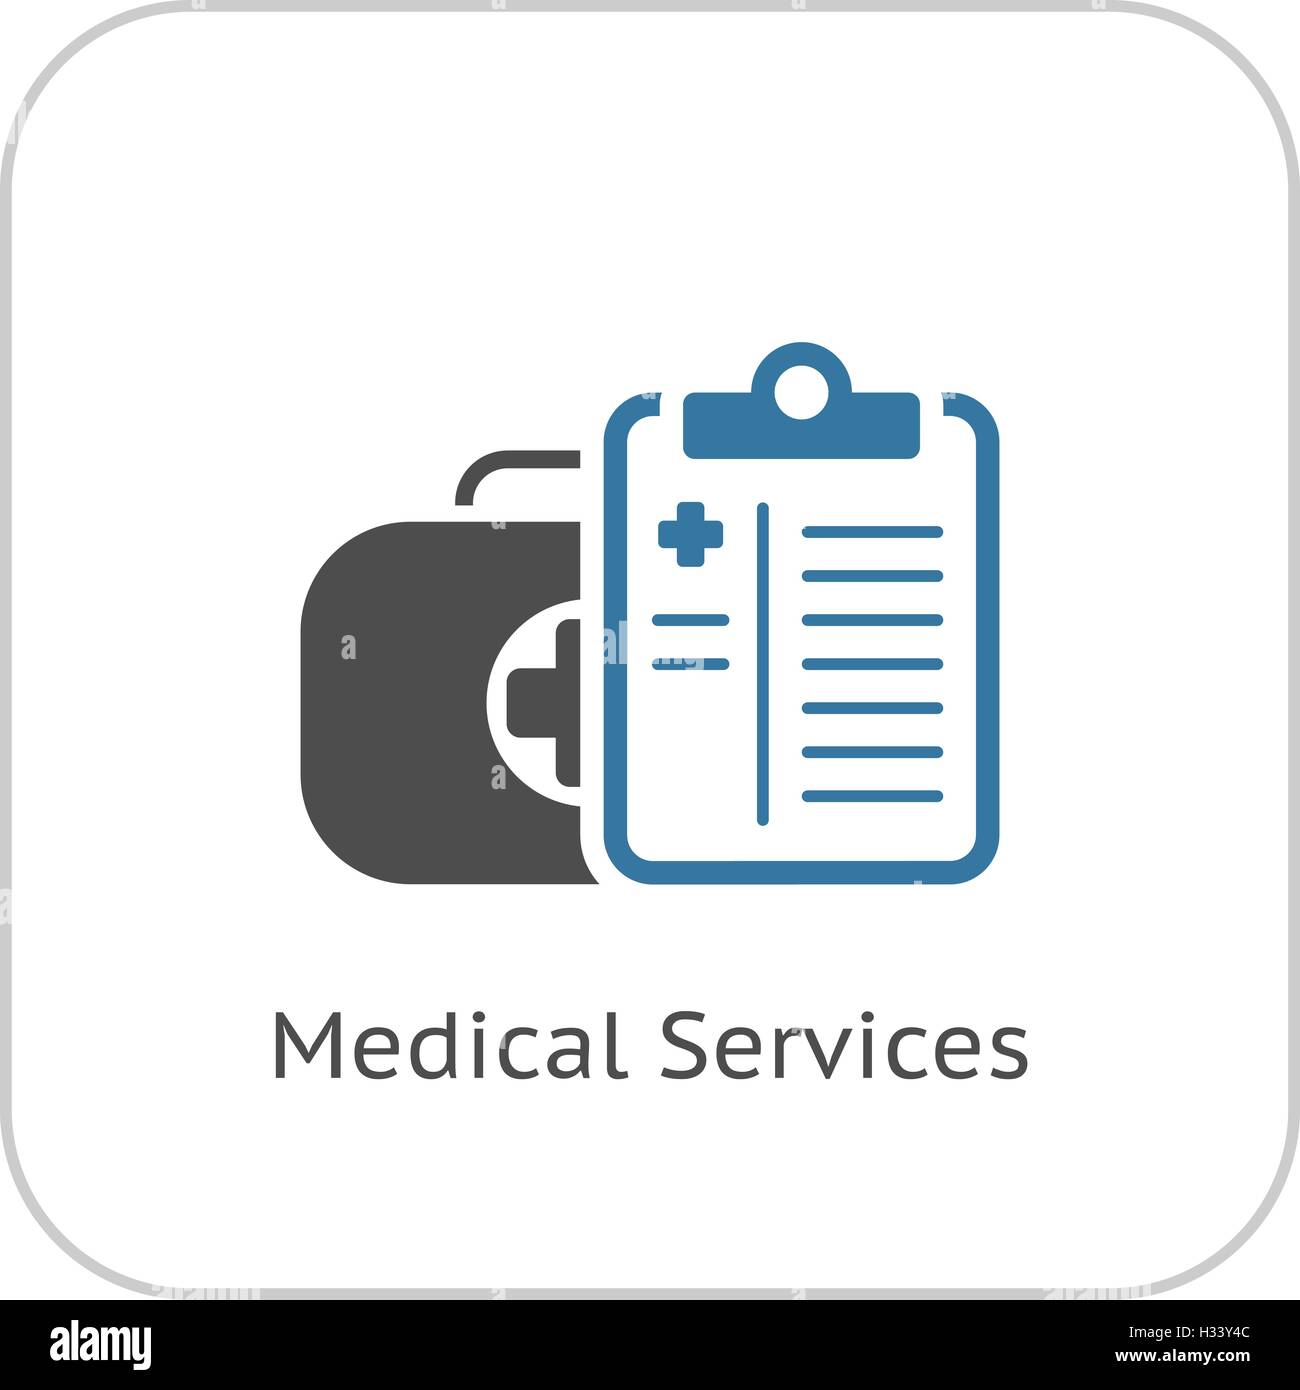 Medical Services Icon. Flat Design. Stock Vector